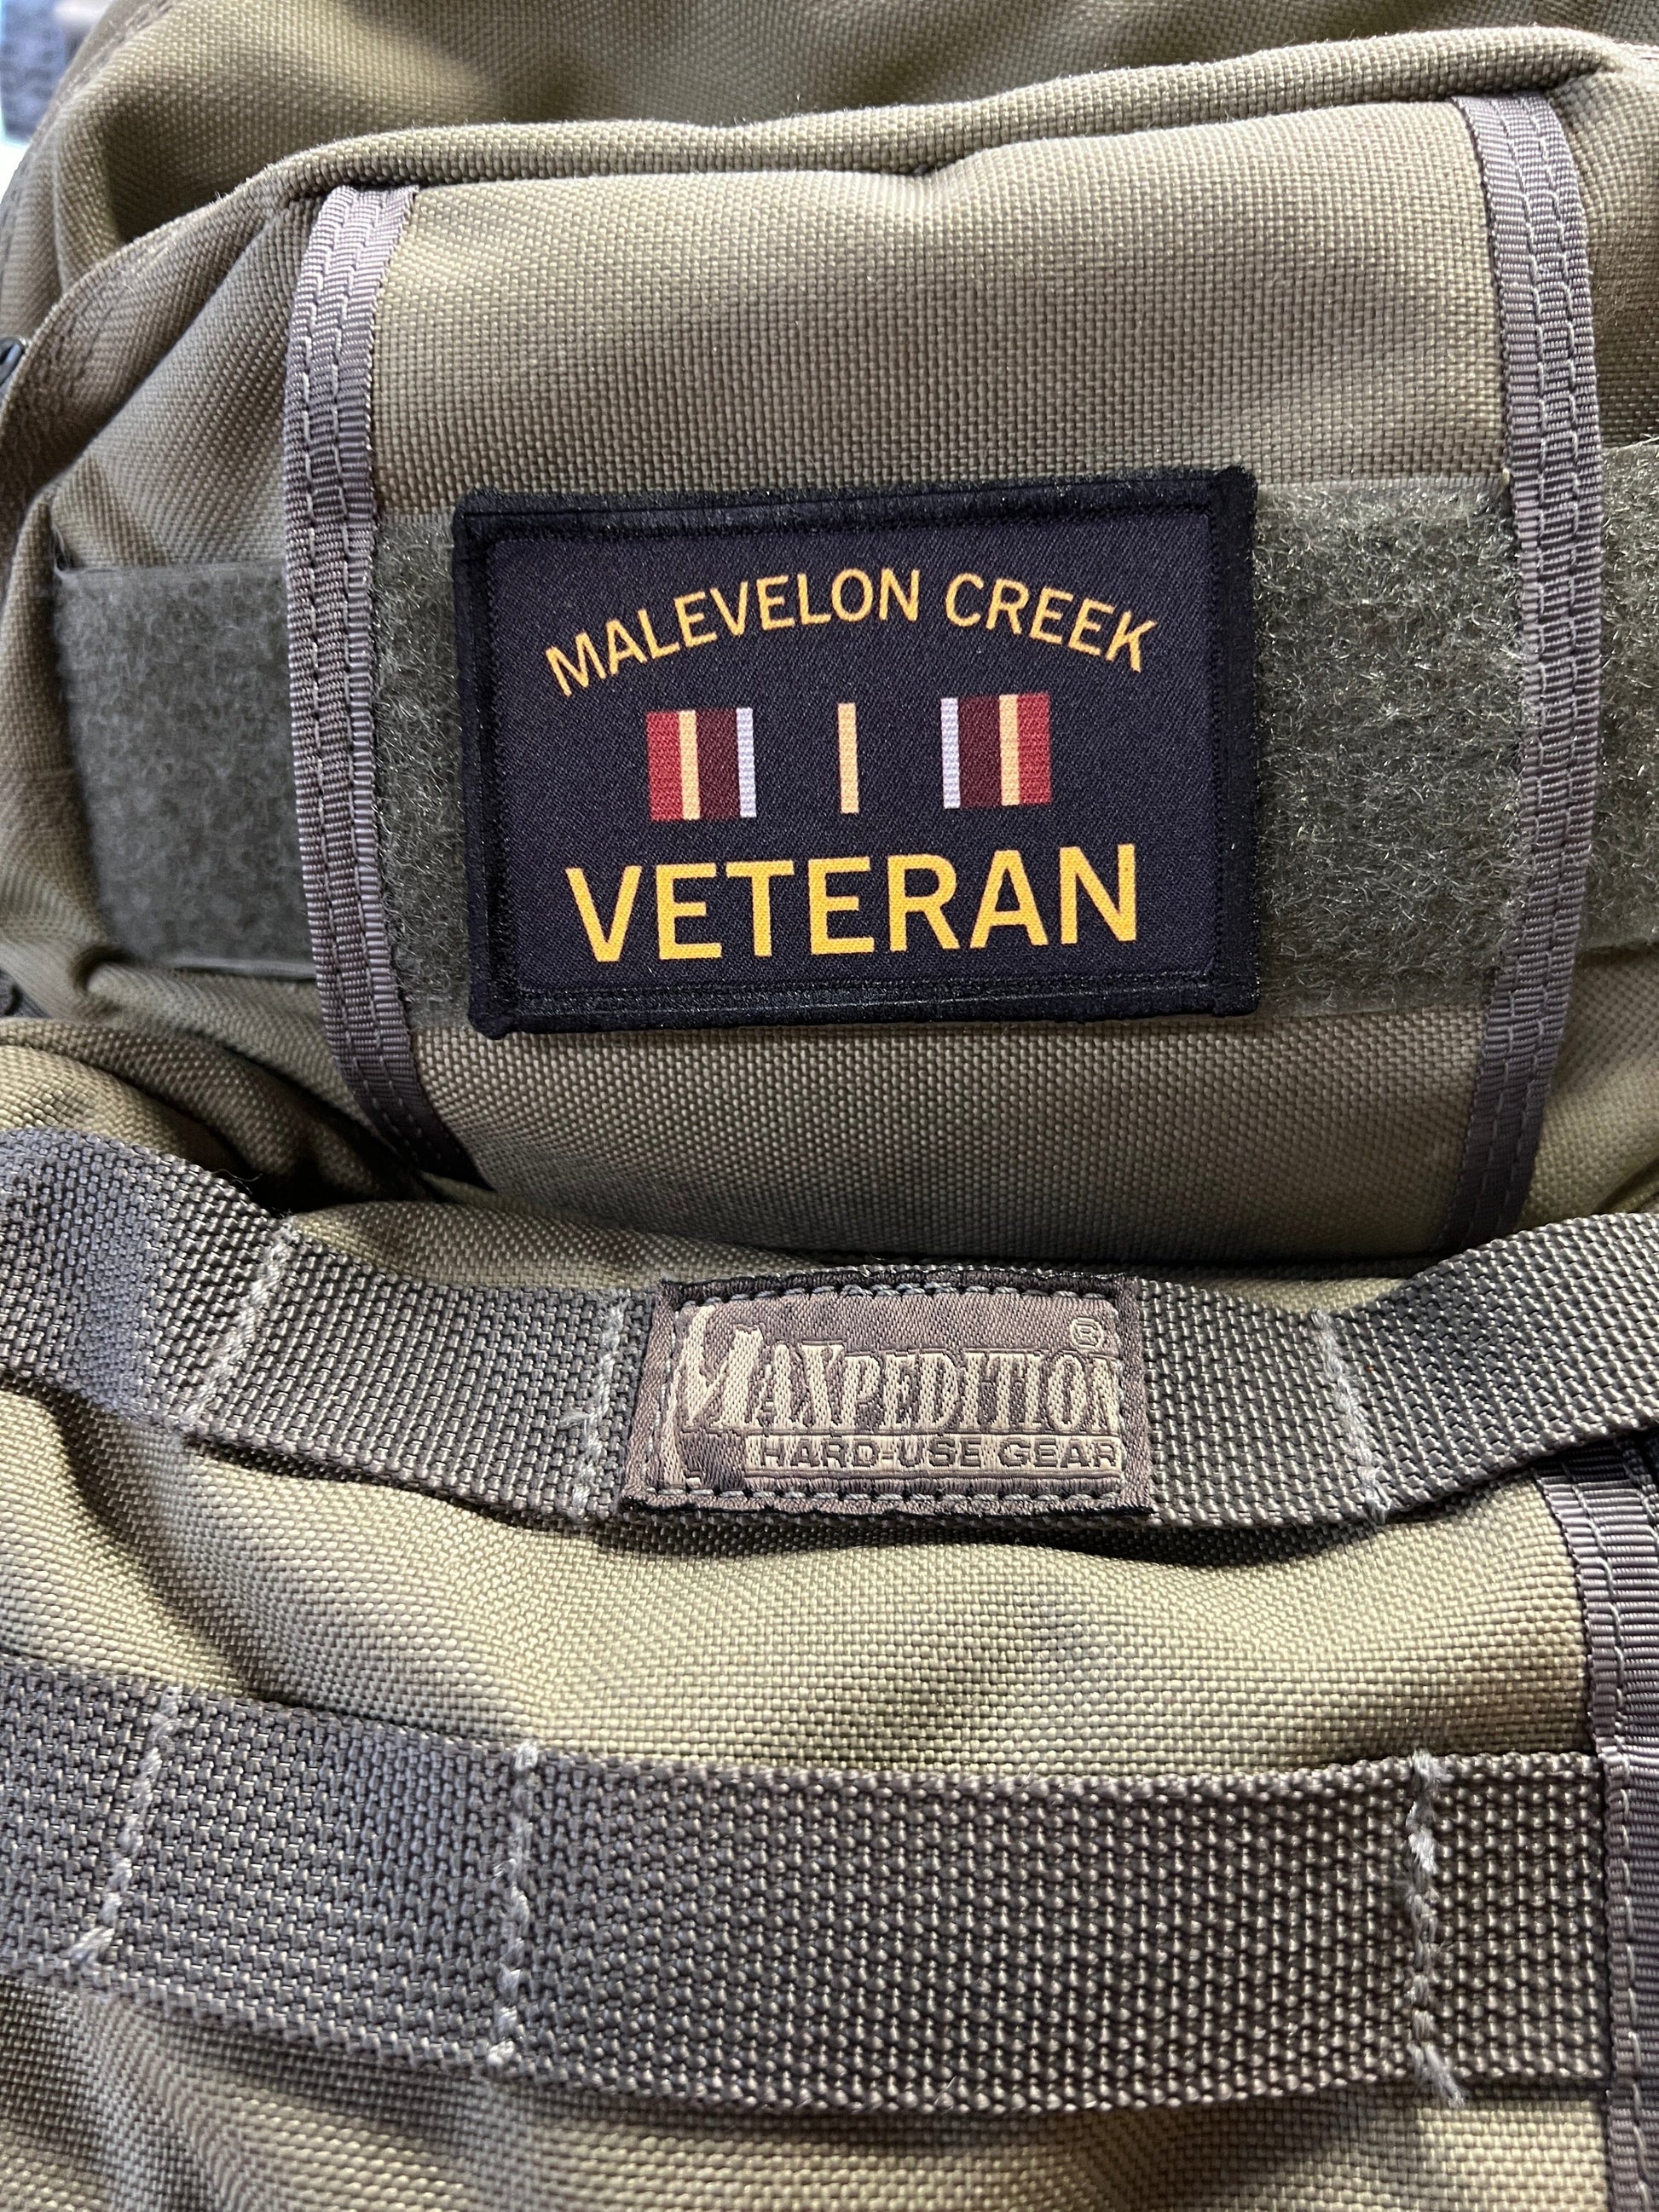 Helldivers 2 MHelldivers 2 Malevelon Creek Veteran Morale Patch